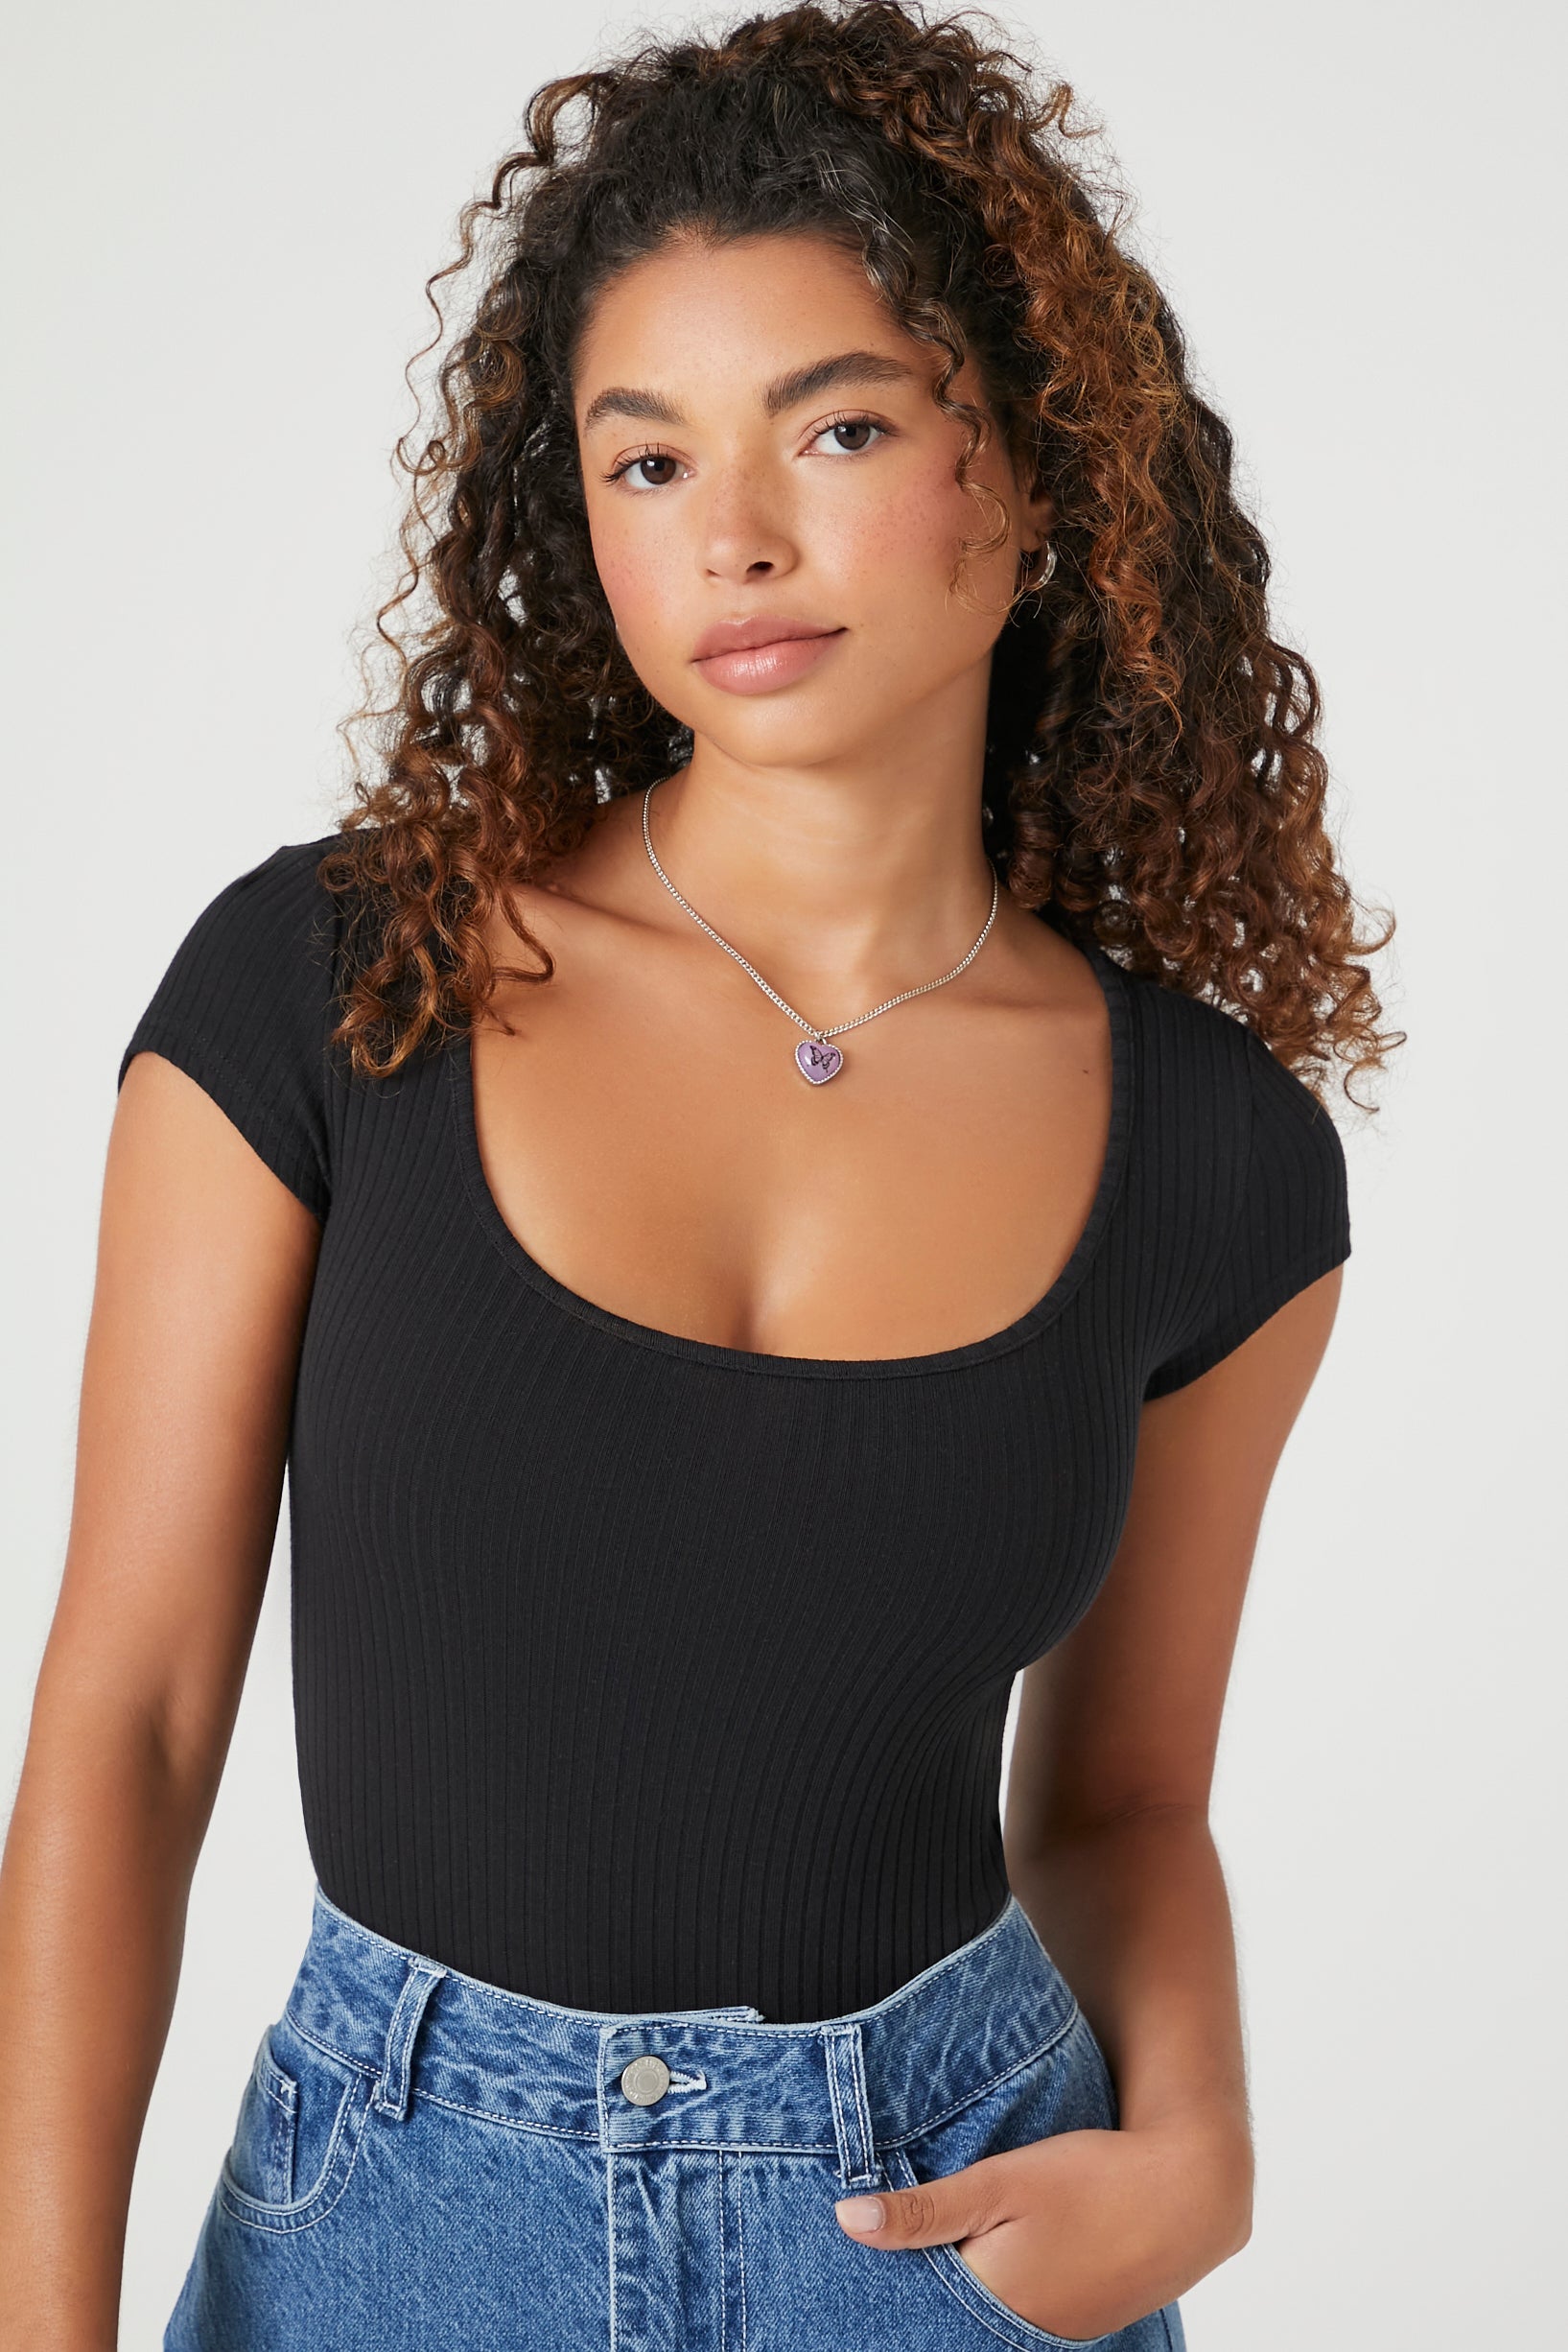 Shop For Ribbed Knit Scoop-Neck Bodysuit | Women - Tops